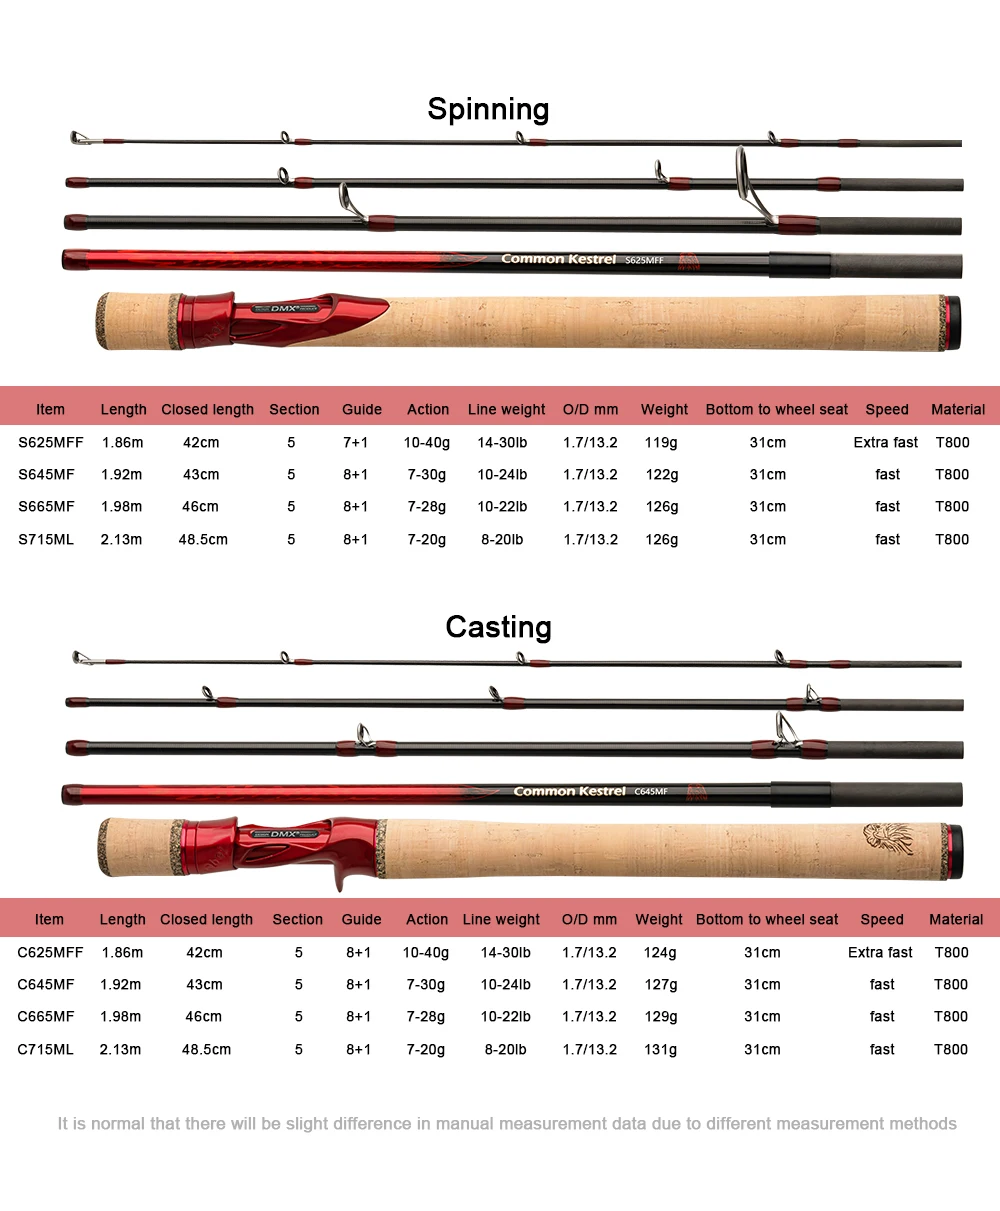 Common Kestrel Travel Fishing Rod Spinning Casting Fuji Guide Sea Ultra Light Carbon 1.8/1.98/2.1m Lure rod enlarge